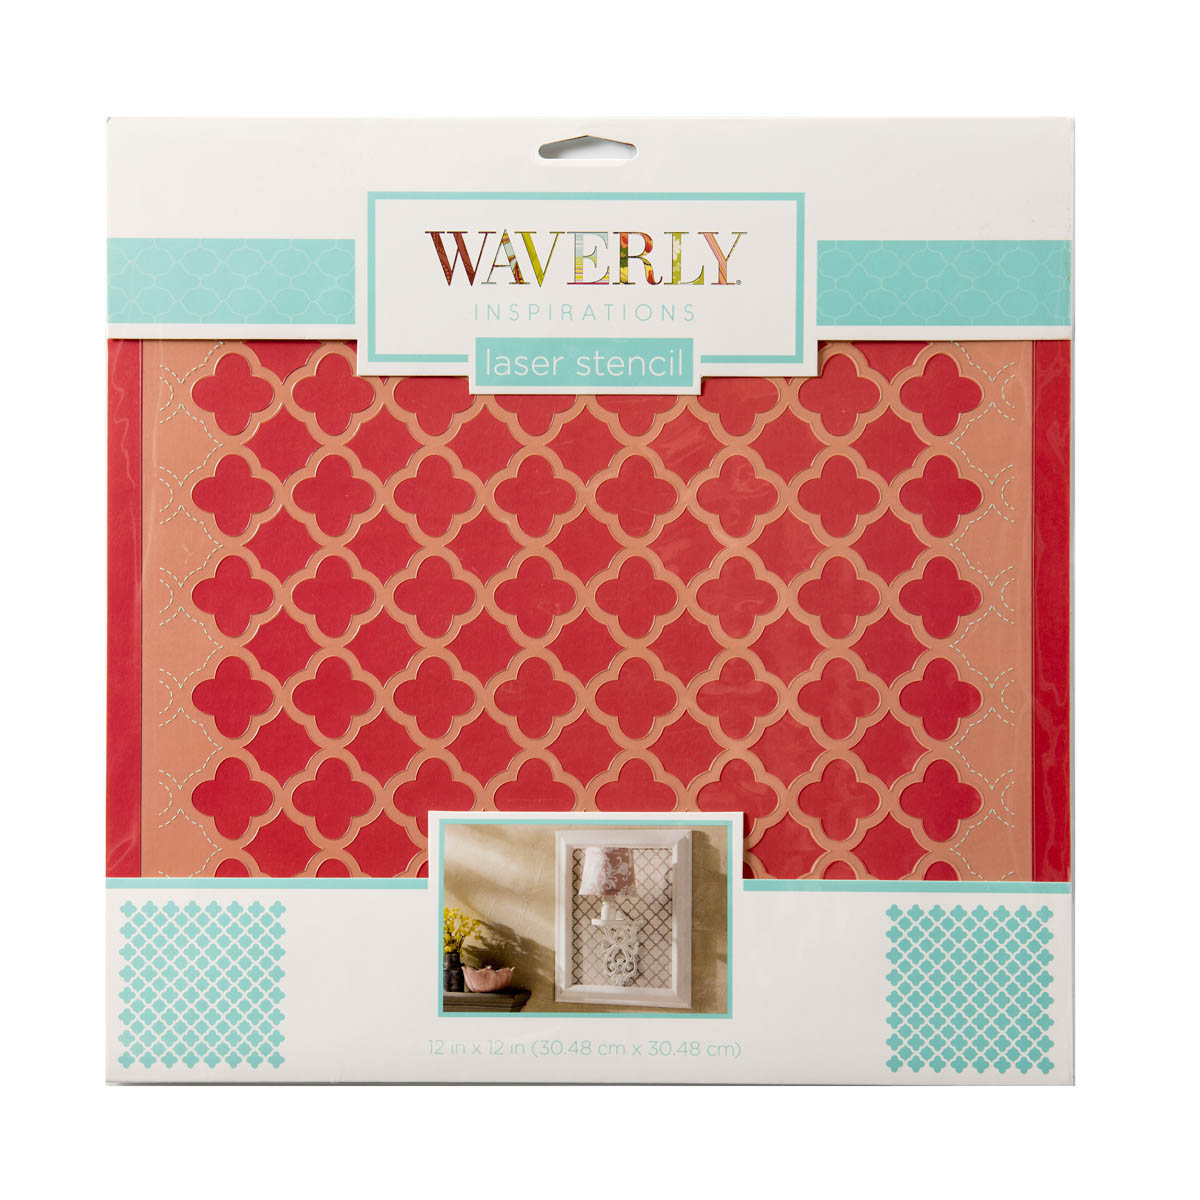 Waverly ® Inspirations Laser Stencils - Décor - Medallion, 12